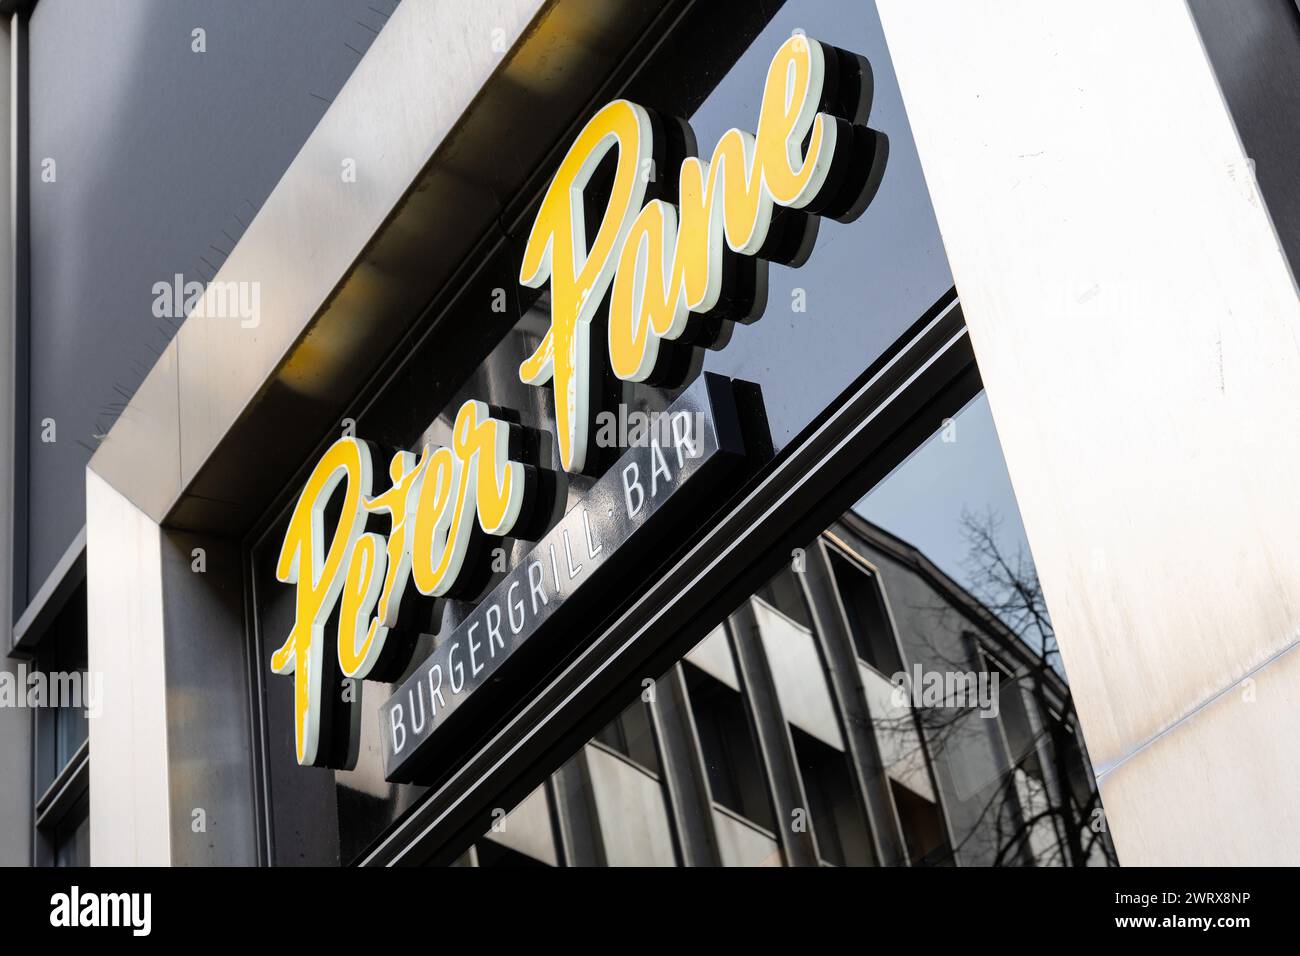 Peter Pane restaurant in Bielefeld, Germany Stock Photo